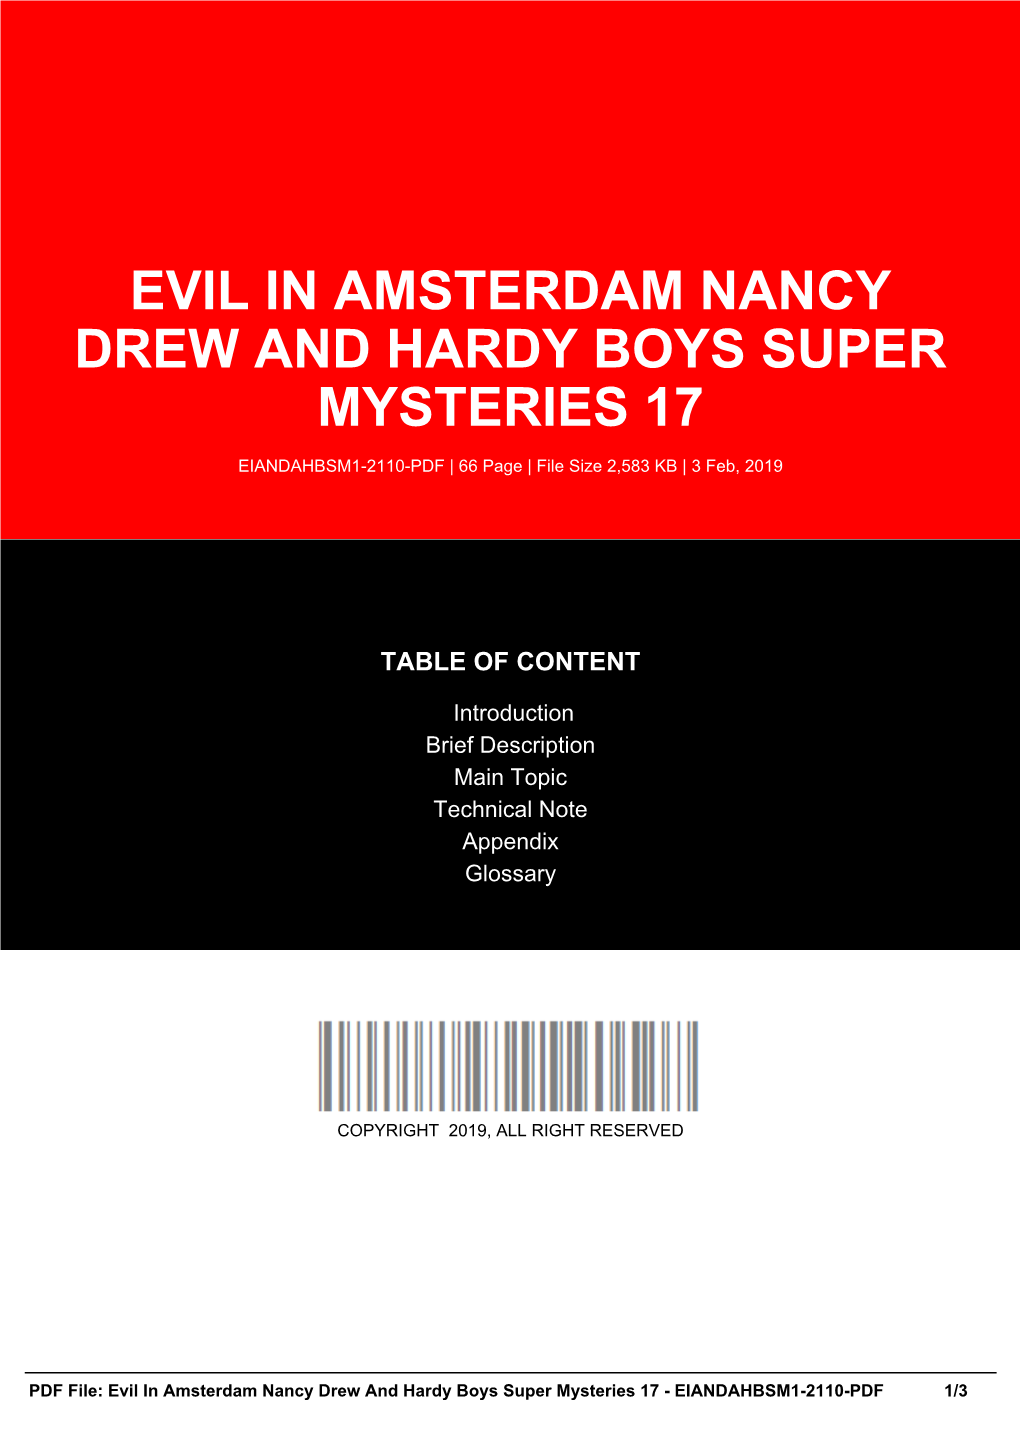 Evil in Amsterdam Nancy Drew and Hardy Boys Super Mysteries 17